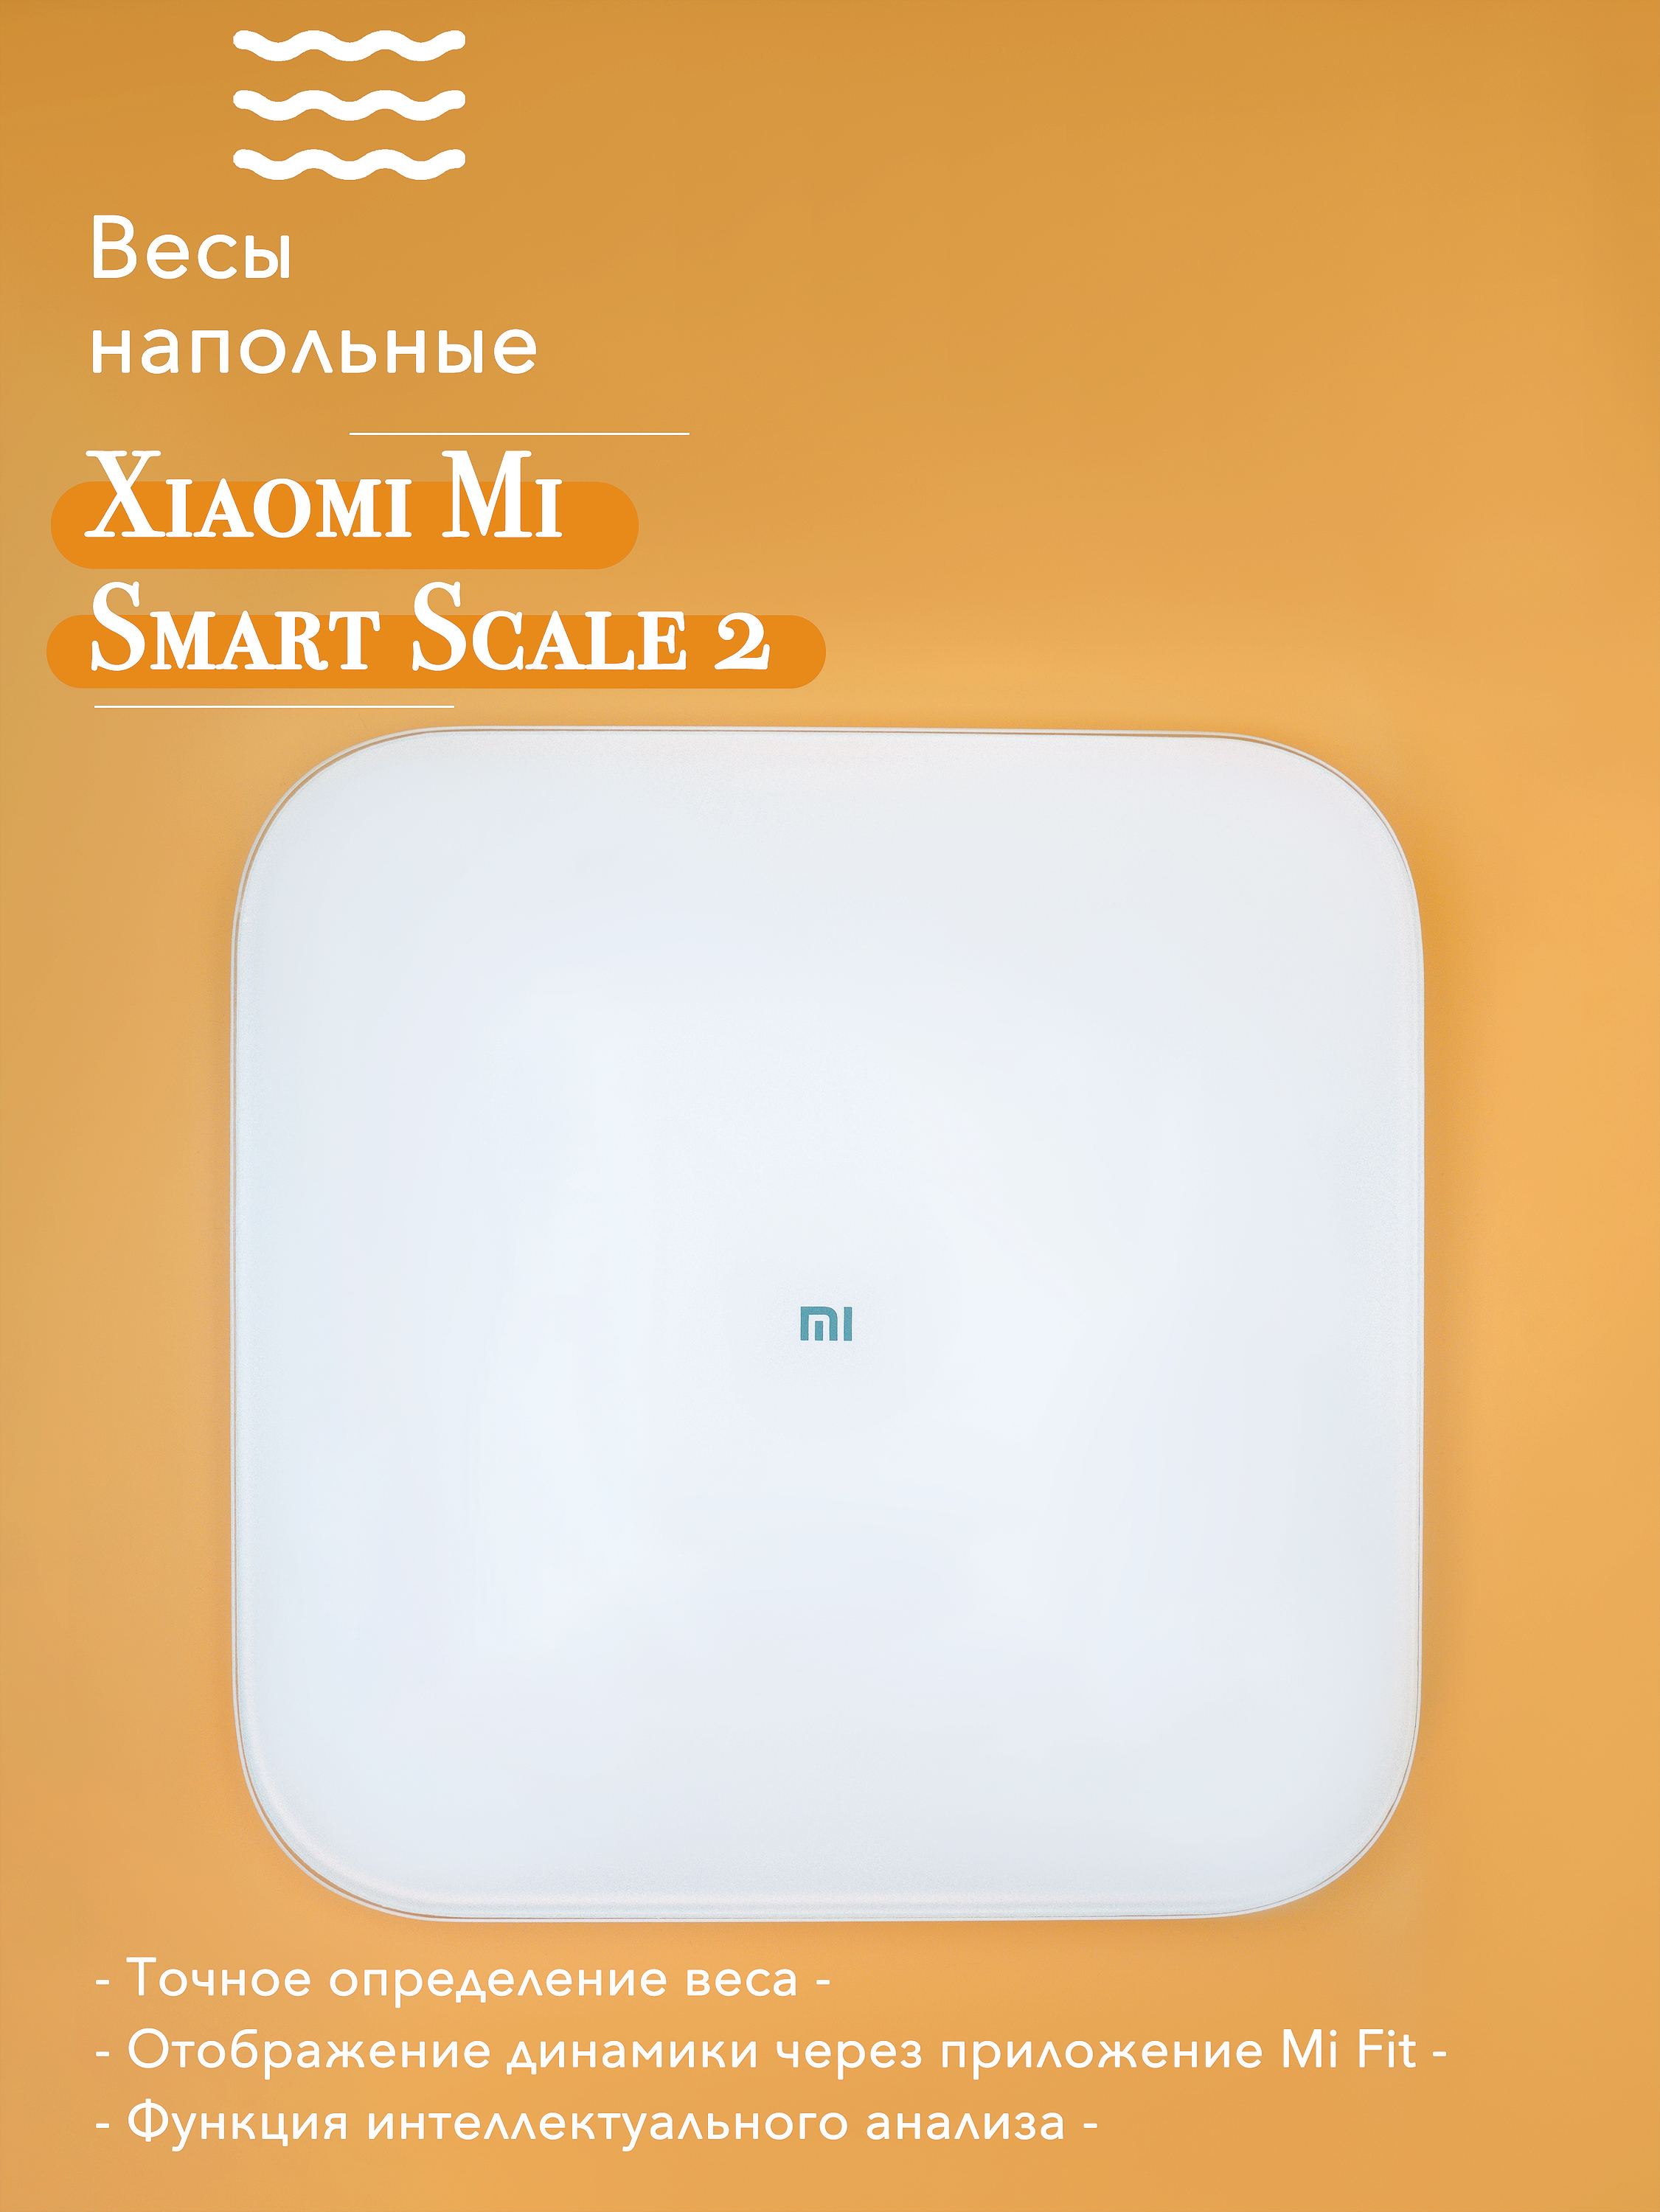 Купить весы сяоми. Mi Smart Scale 2. Xiaomi mi Smart Scale 2. Весы Xiaomi mi Smart Scale 2. Напольные весы Xiaomi mi Smart Scale.